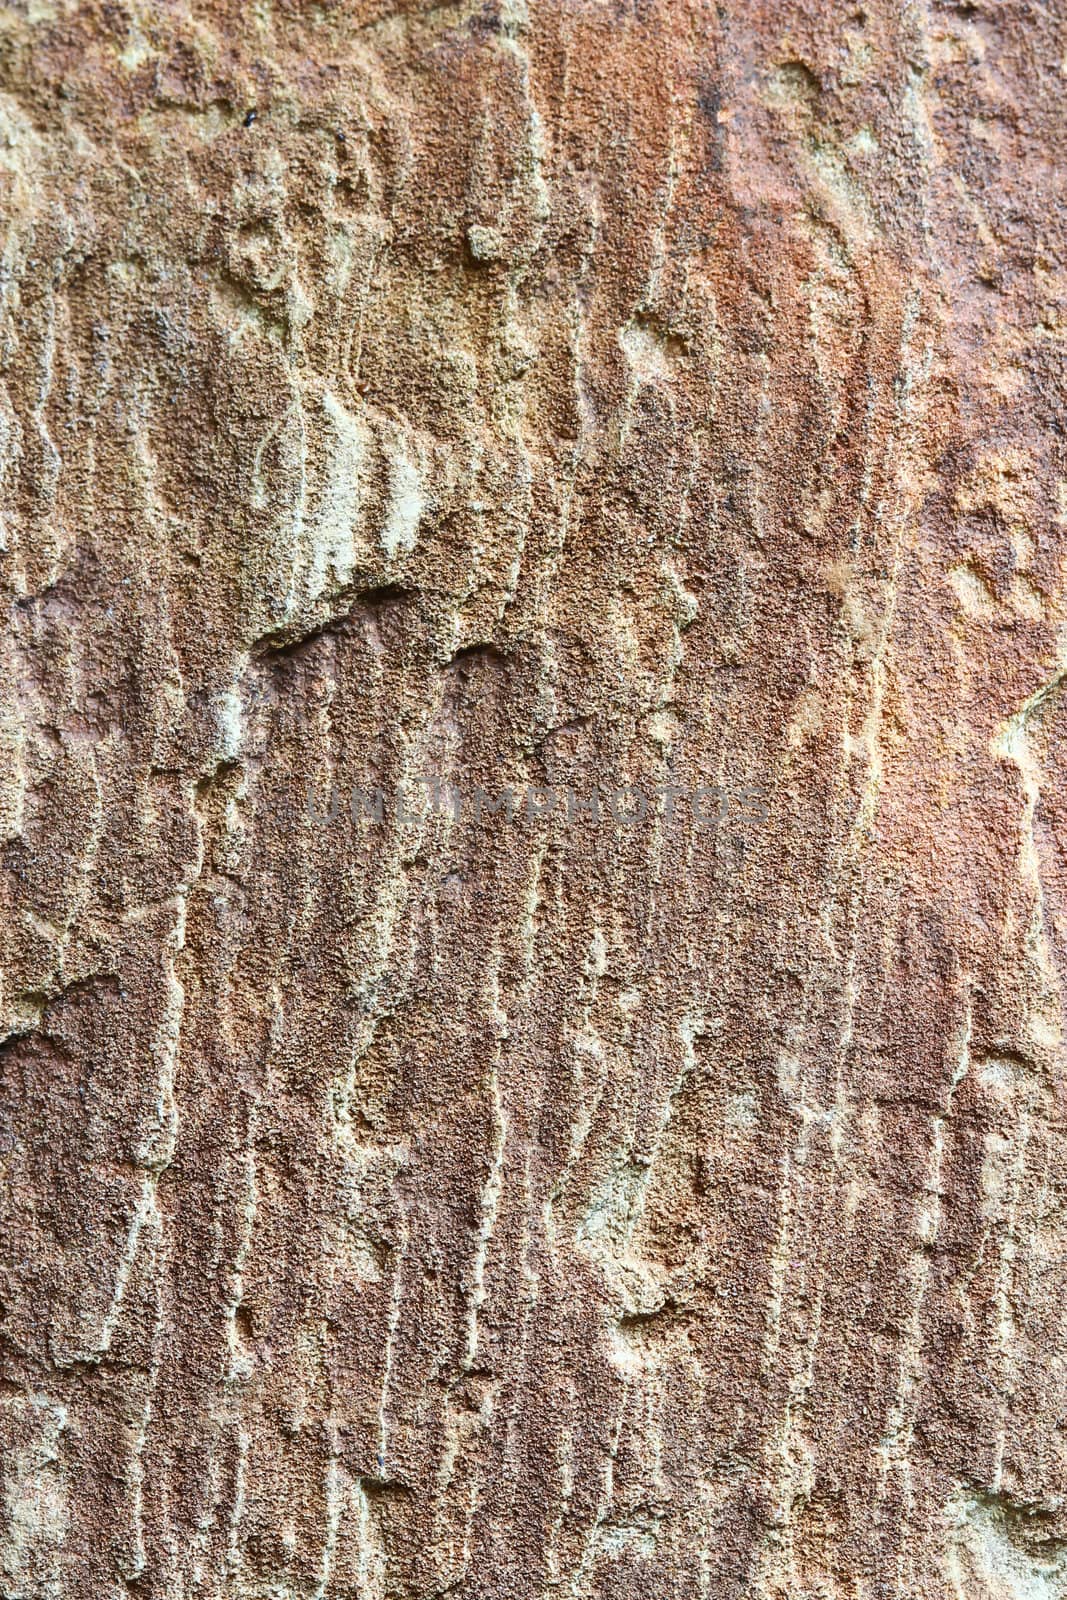 Seamless rock texture background closeup